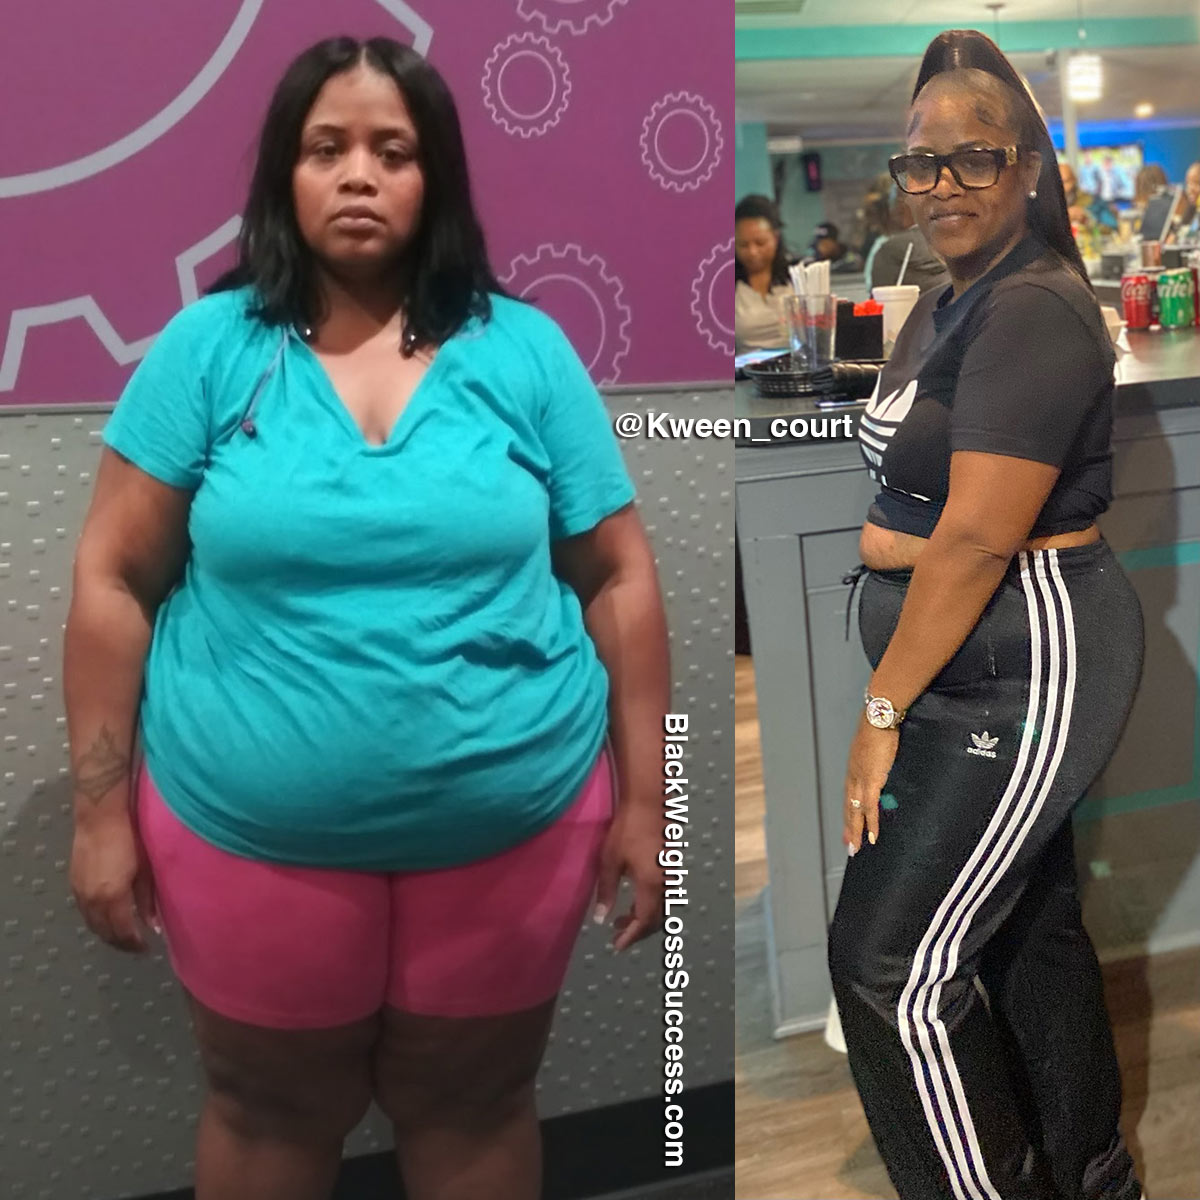 Courtney lost 103 pounds